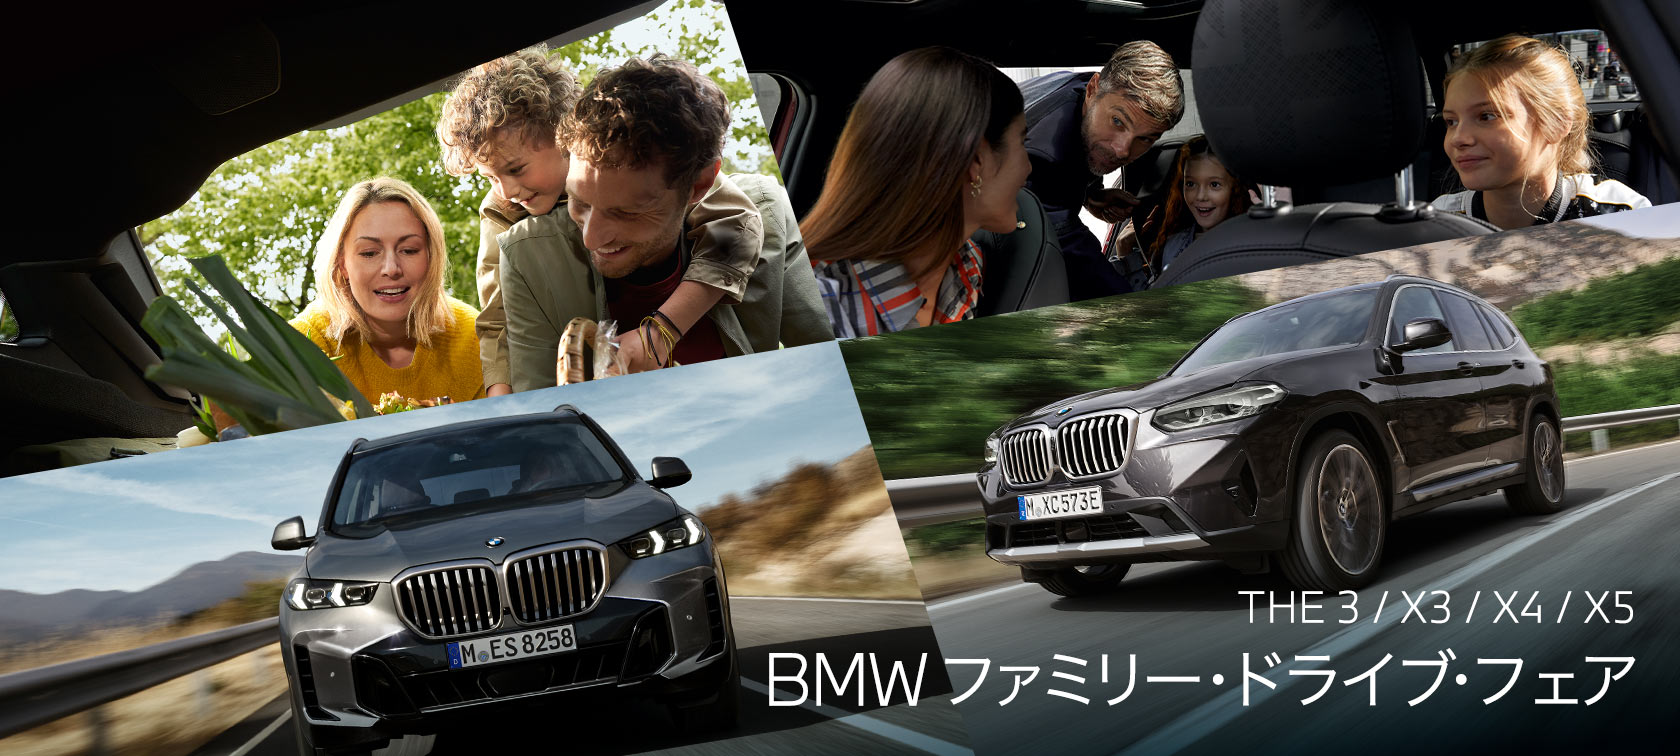 BMW ファミリー・ドライブ・フェア